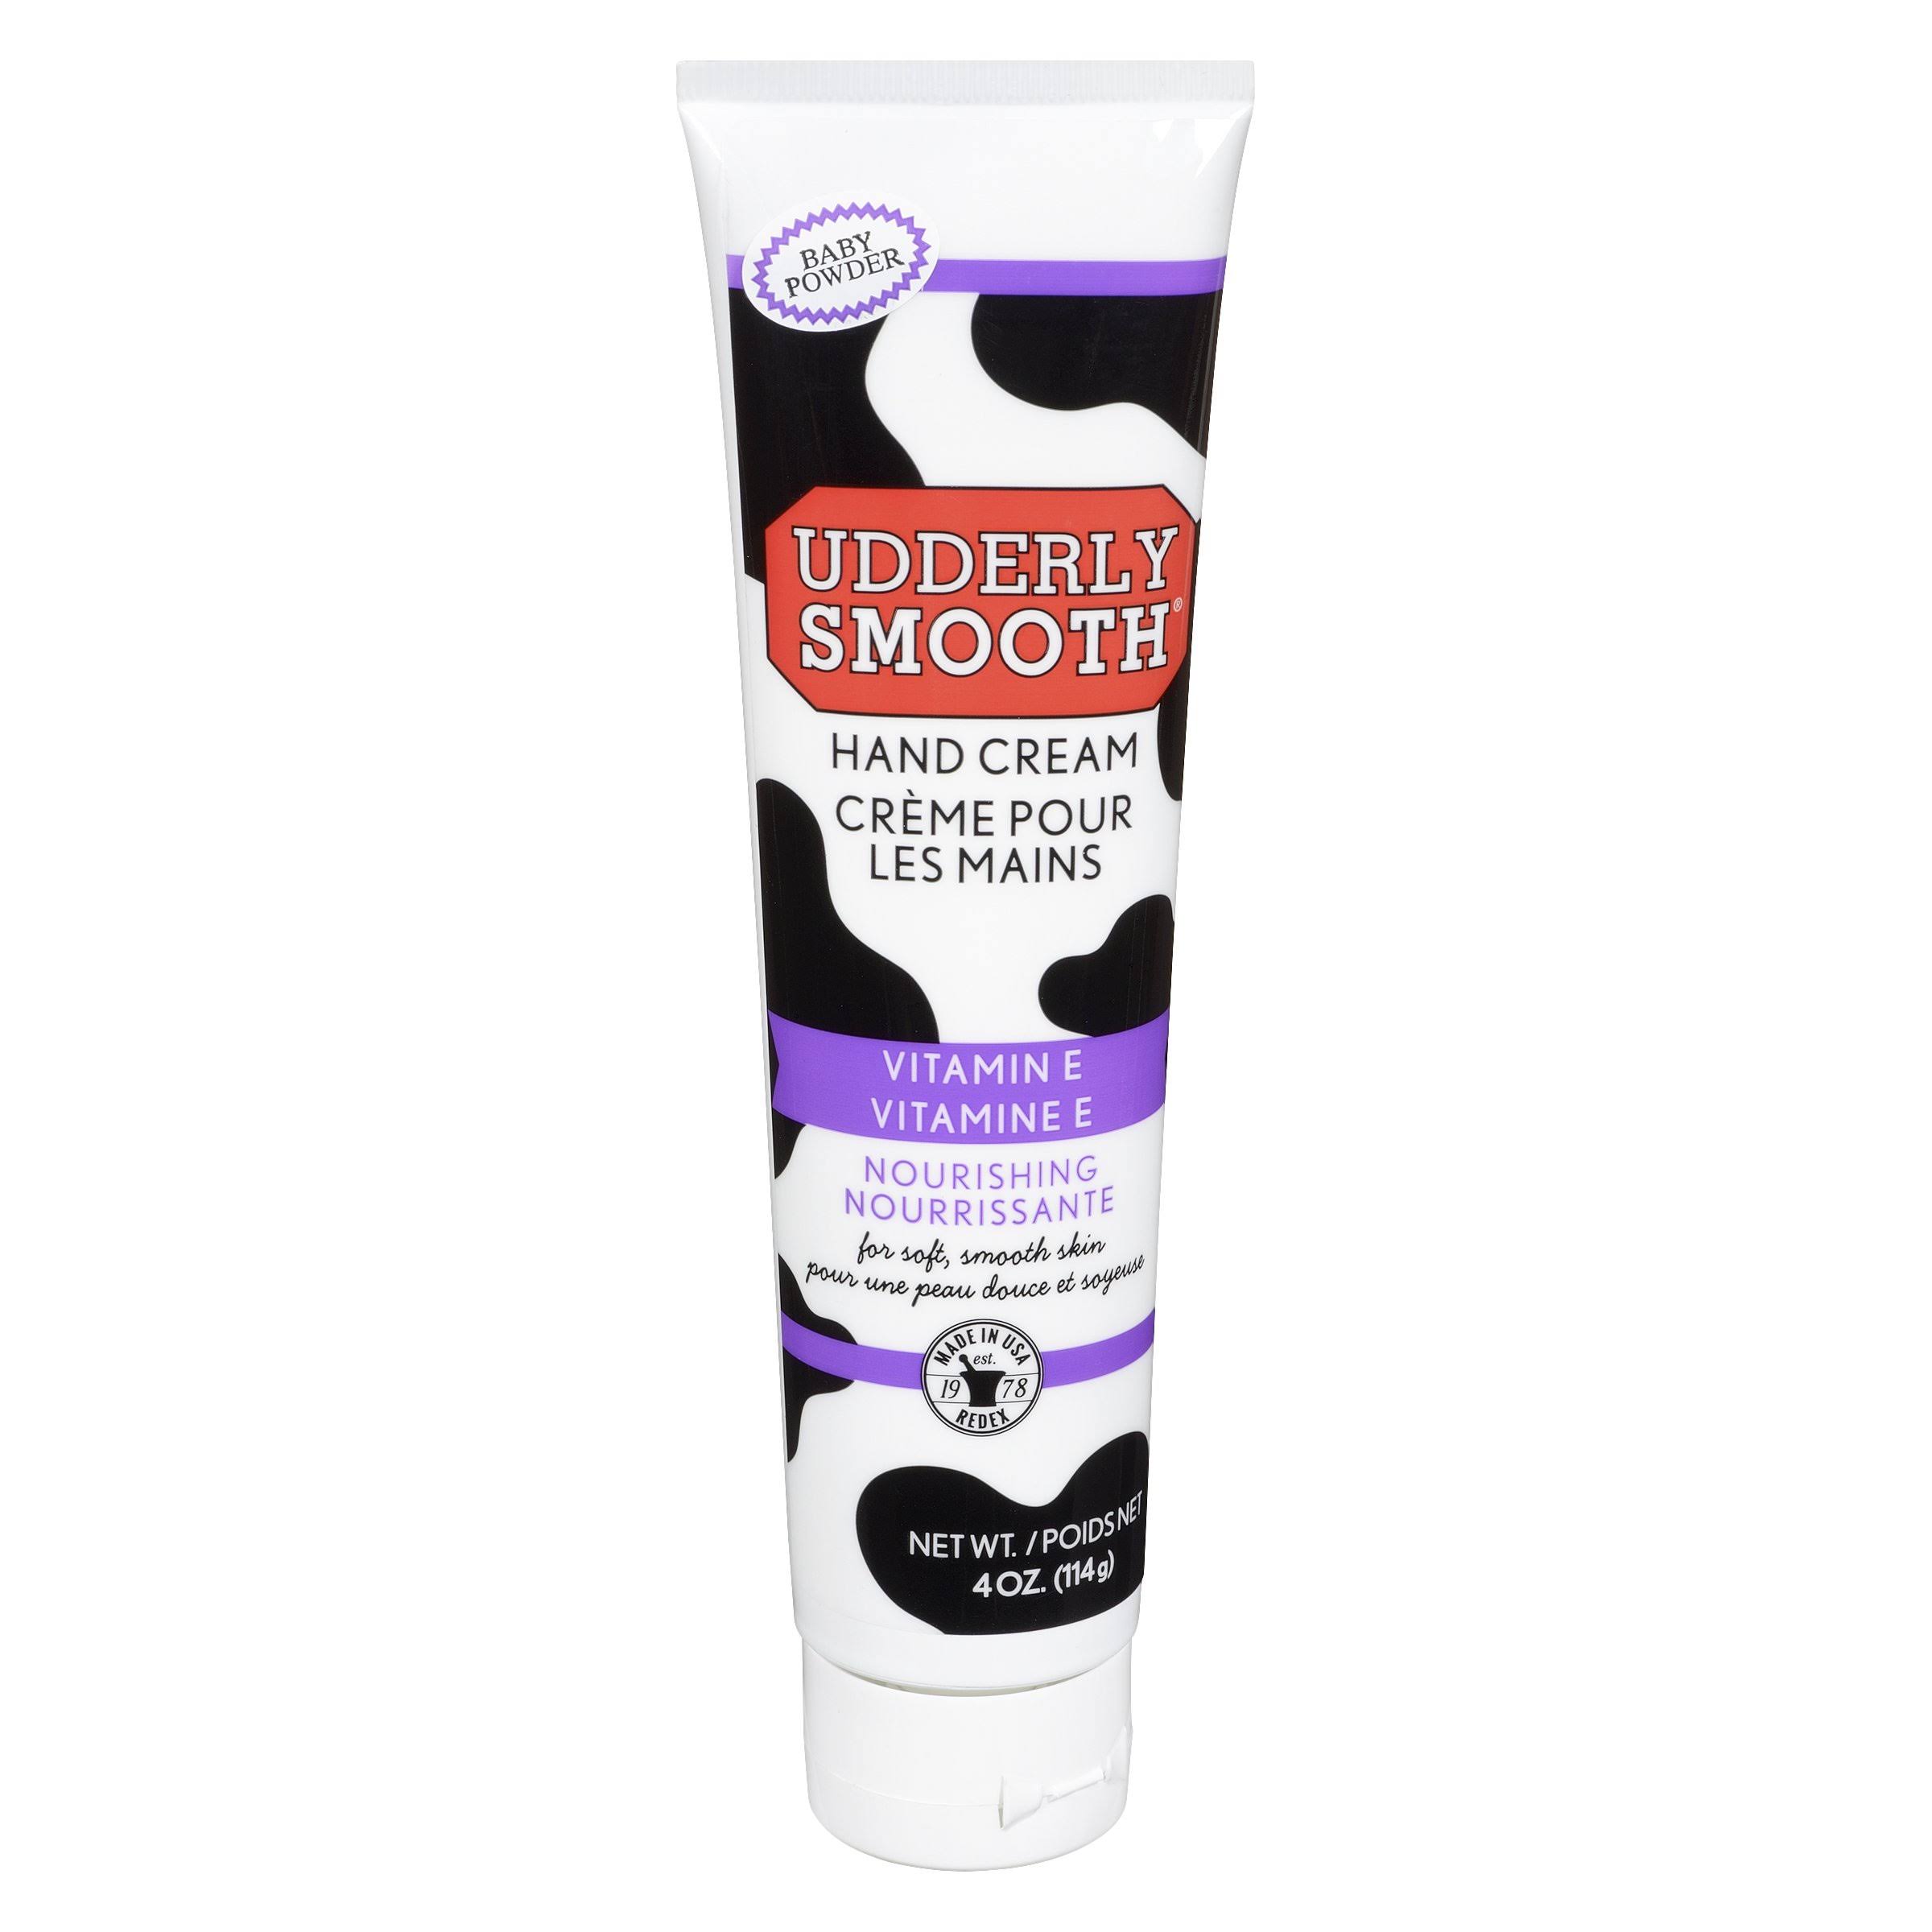 Udderly Smooth Vitamin E Hand Cream - 3oz